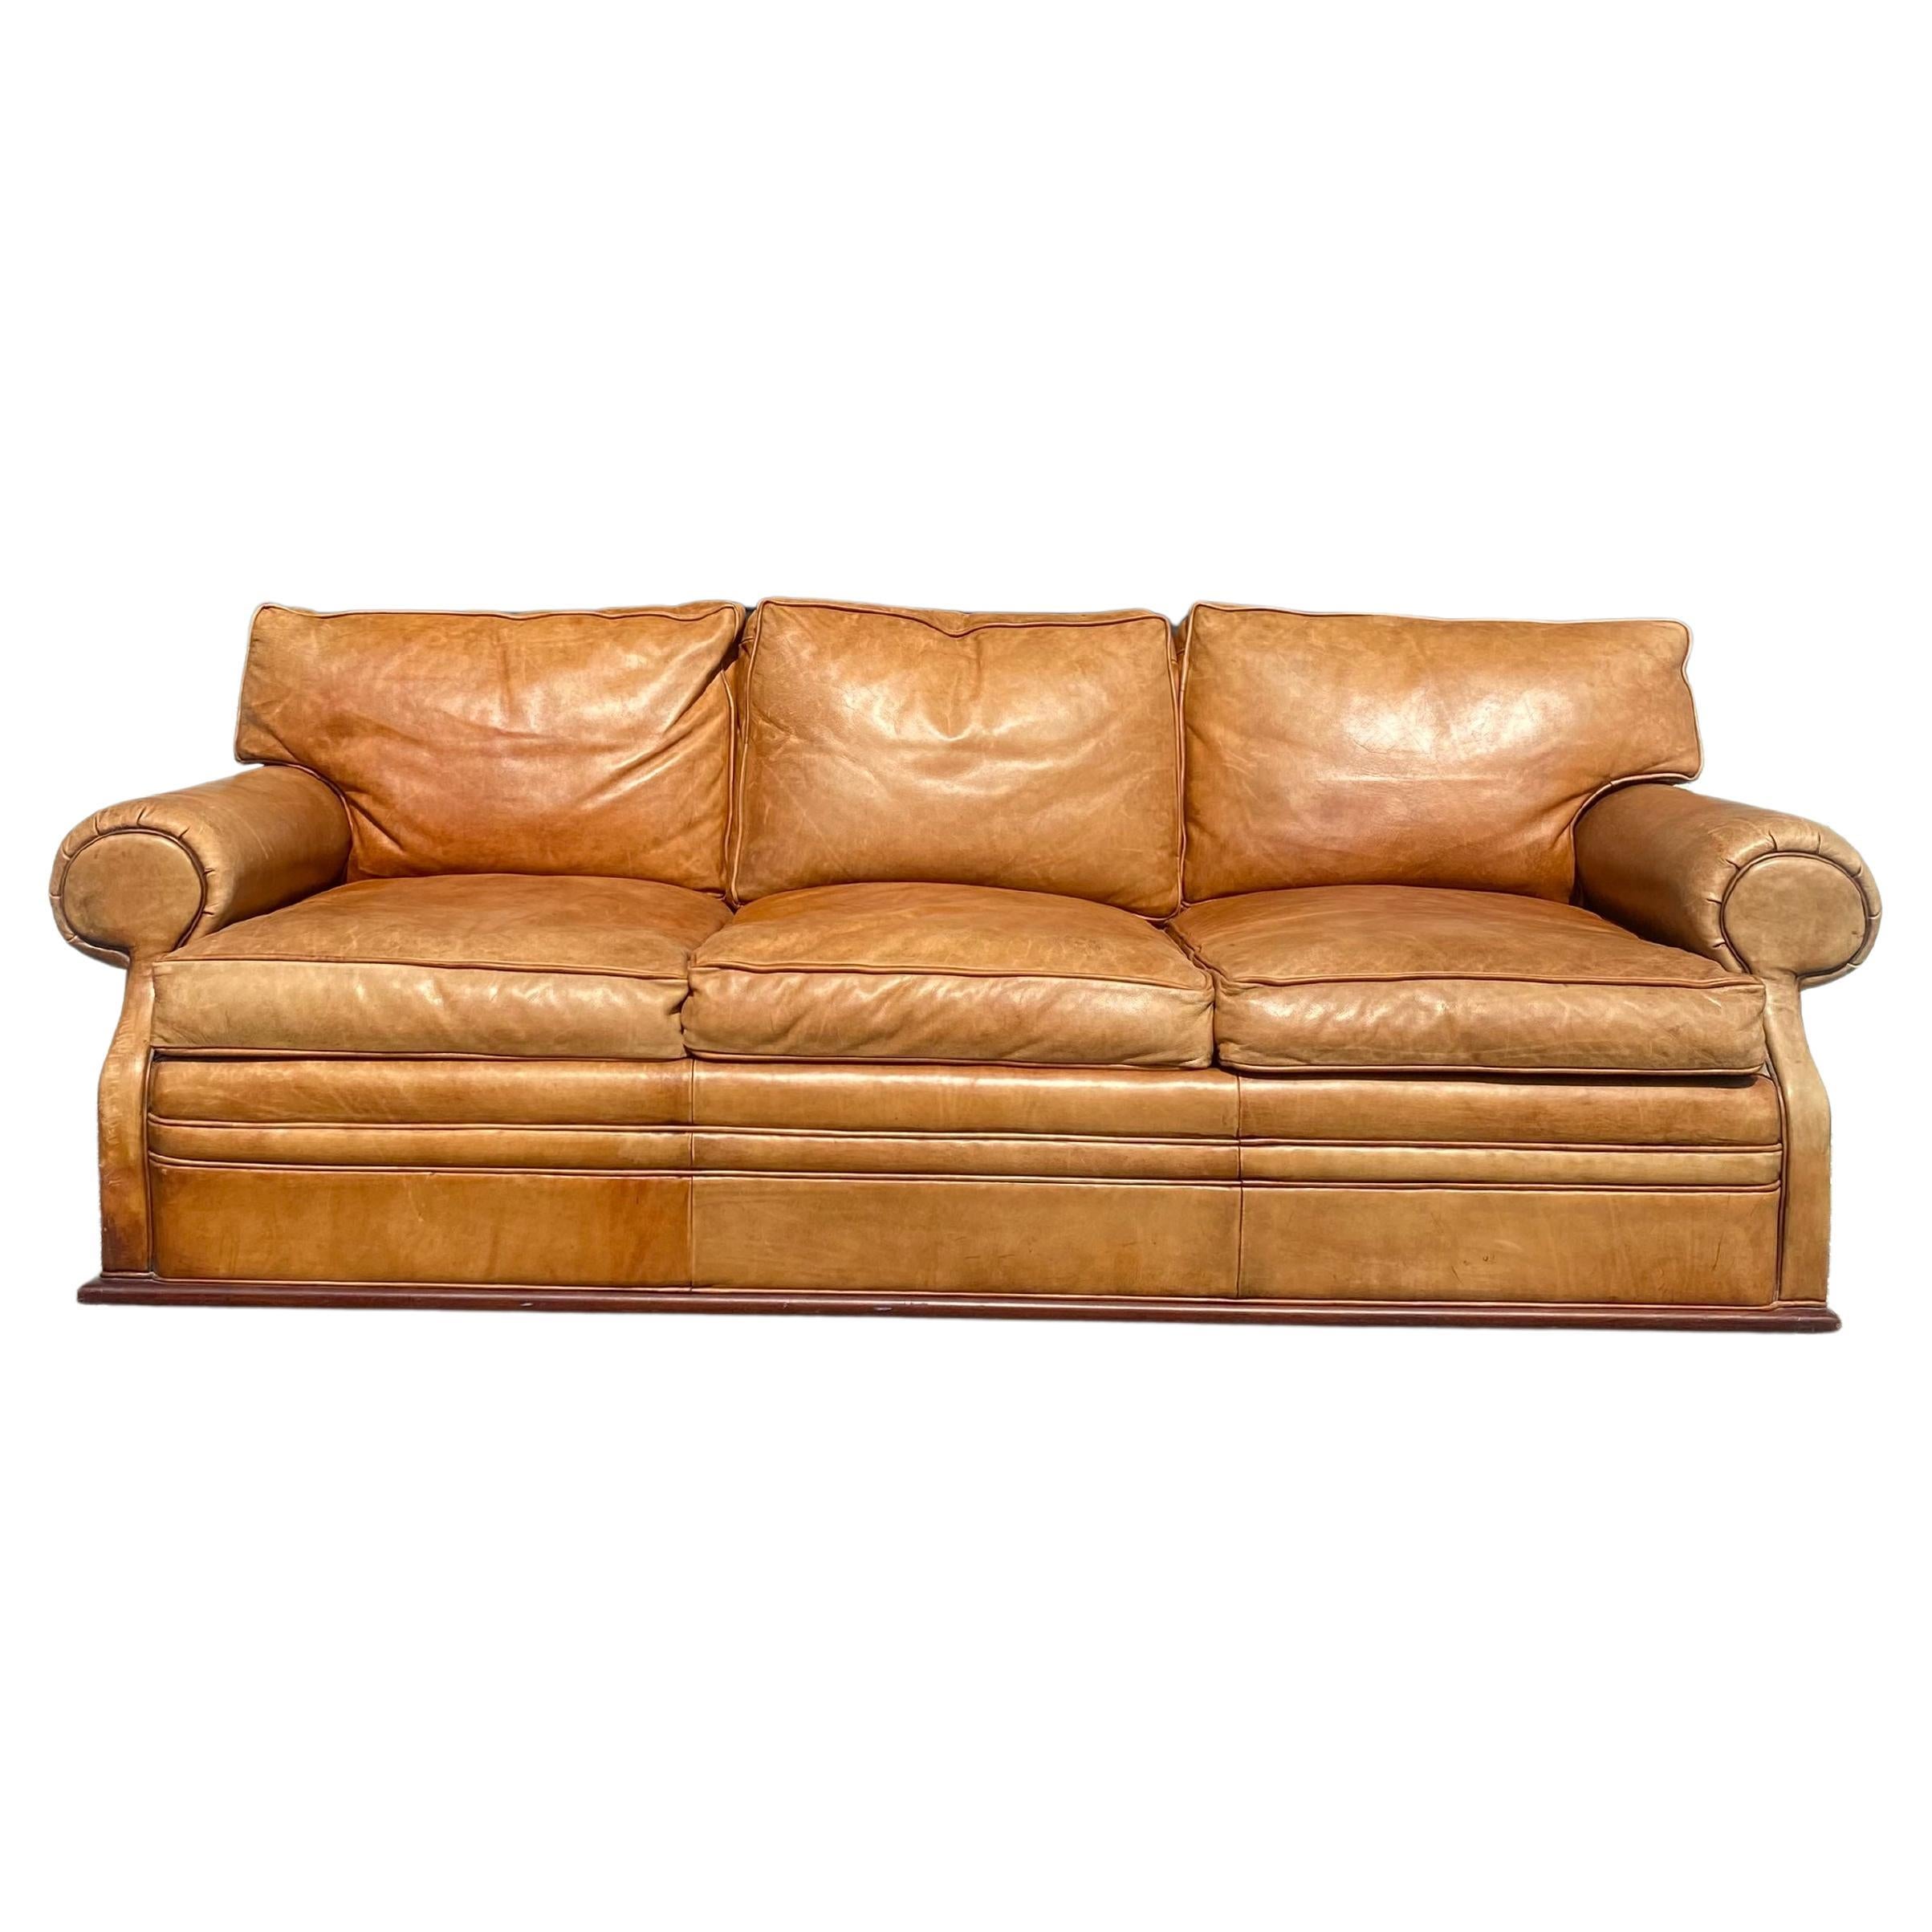 Ralph Lauren Leather Sofa - 34 For Sale on 1stDibs | ralph lauren leather  sofa for sale, sofa ralph lauren, ralph lauren leather couch